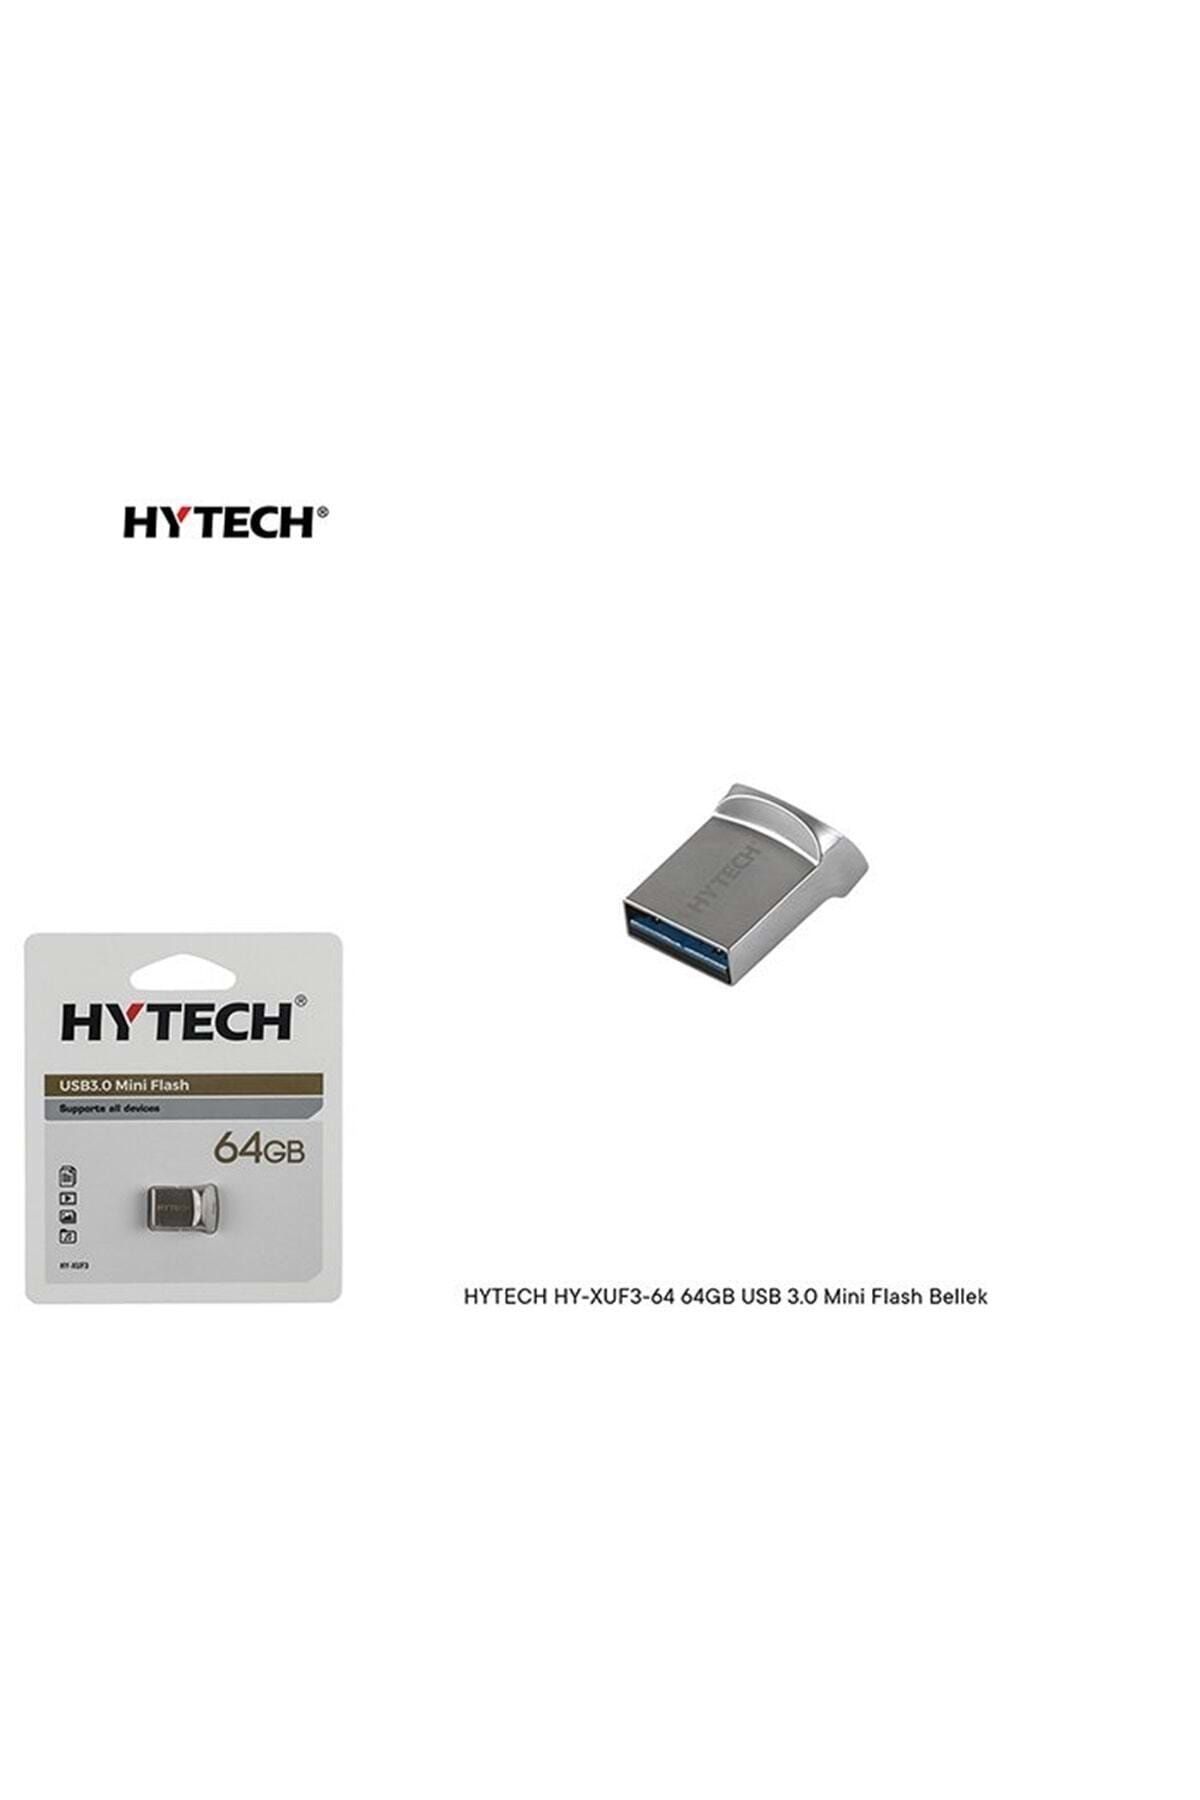 Hytech Hy-xuf3-64 64 Gb Usb 3.0 Mini Flash Bellek